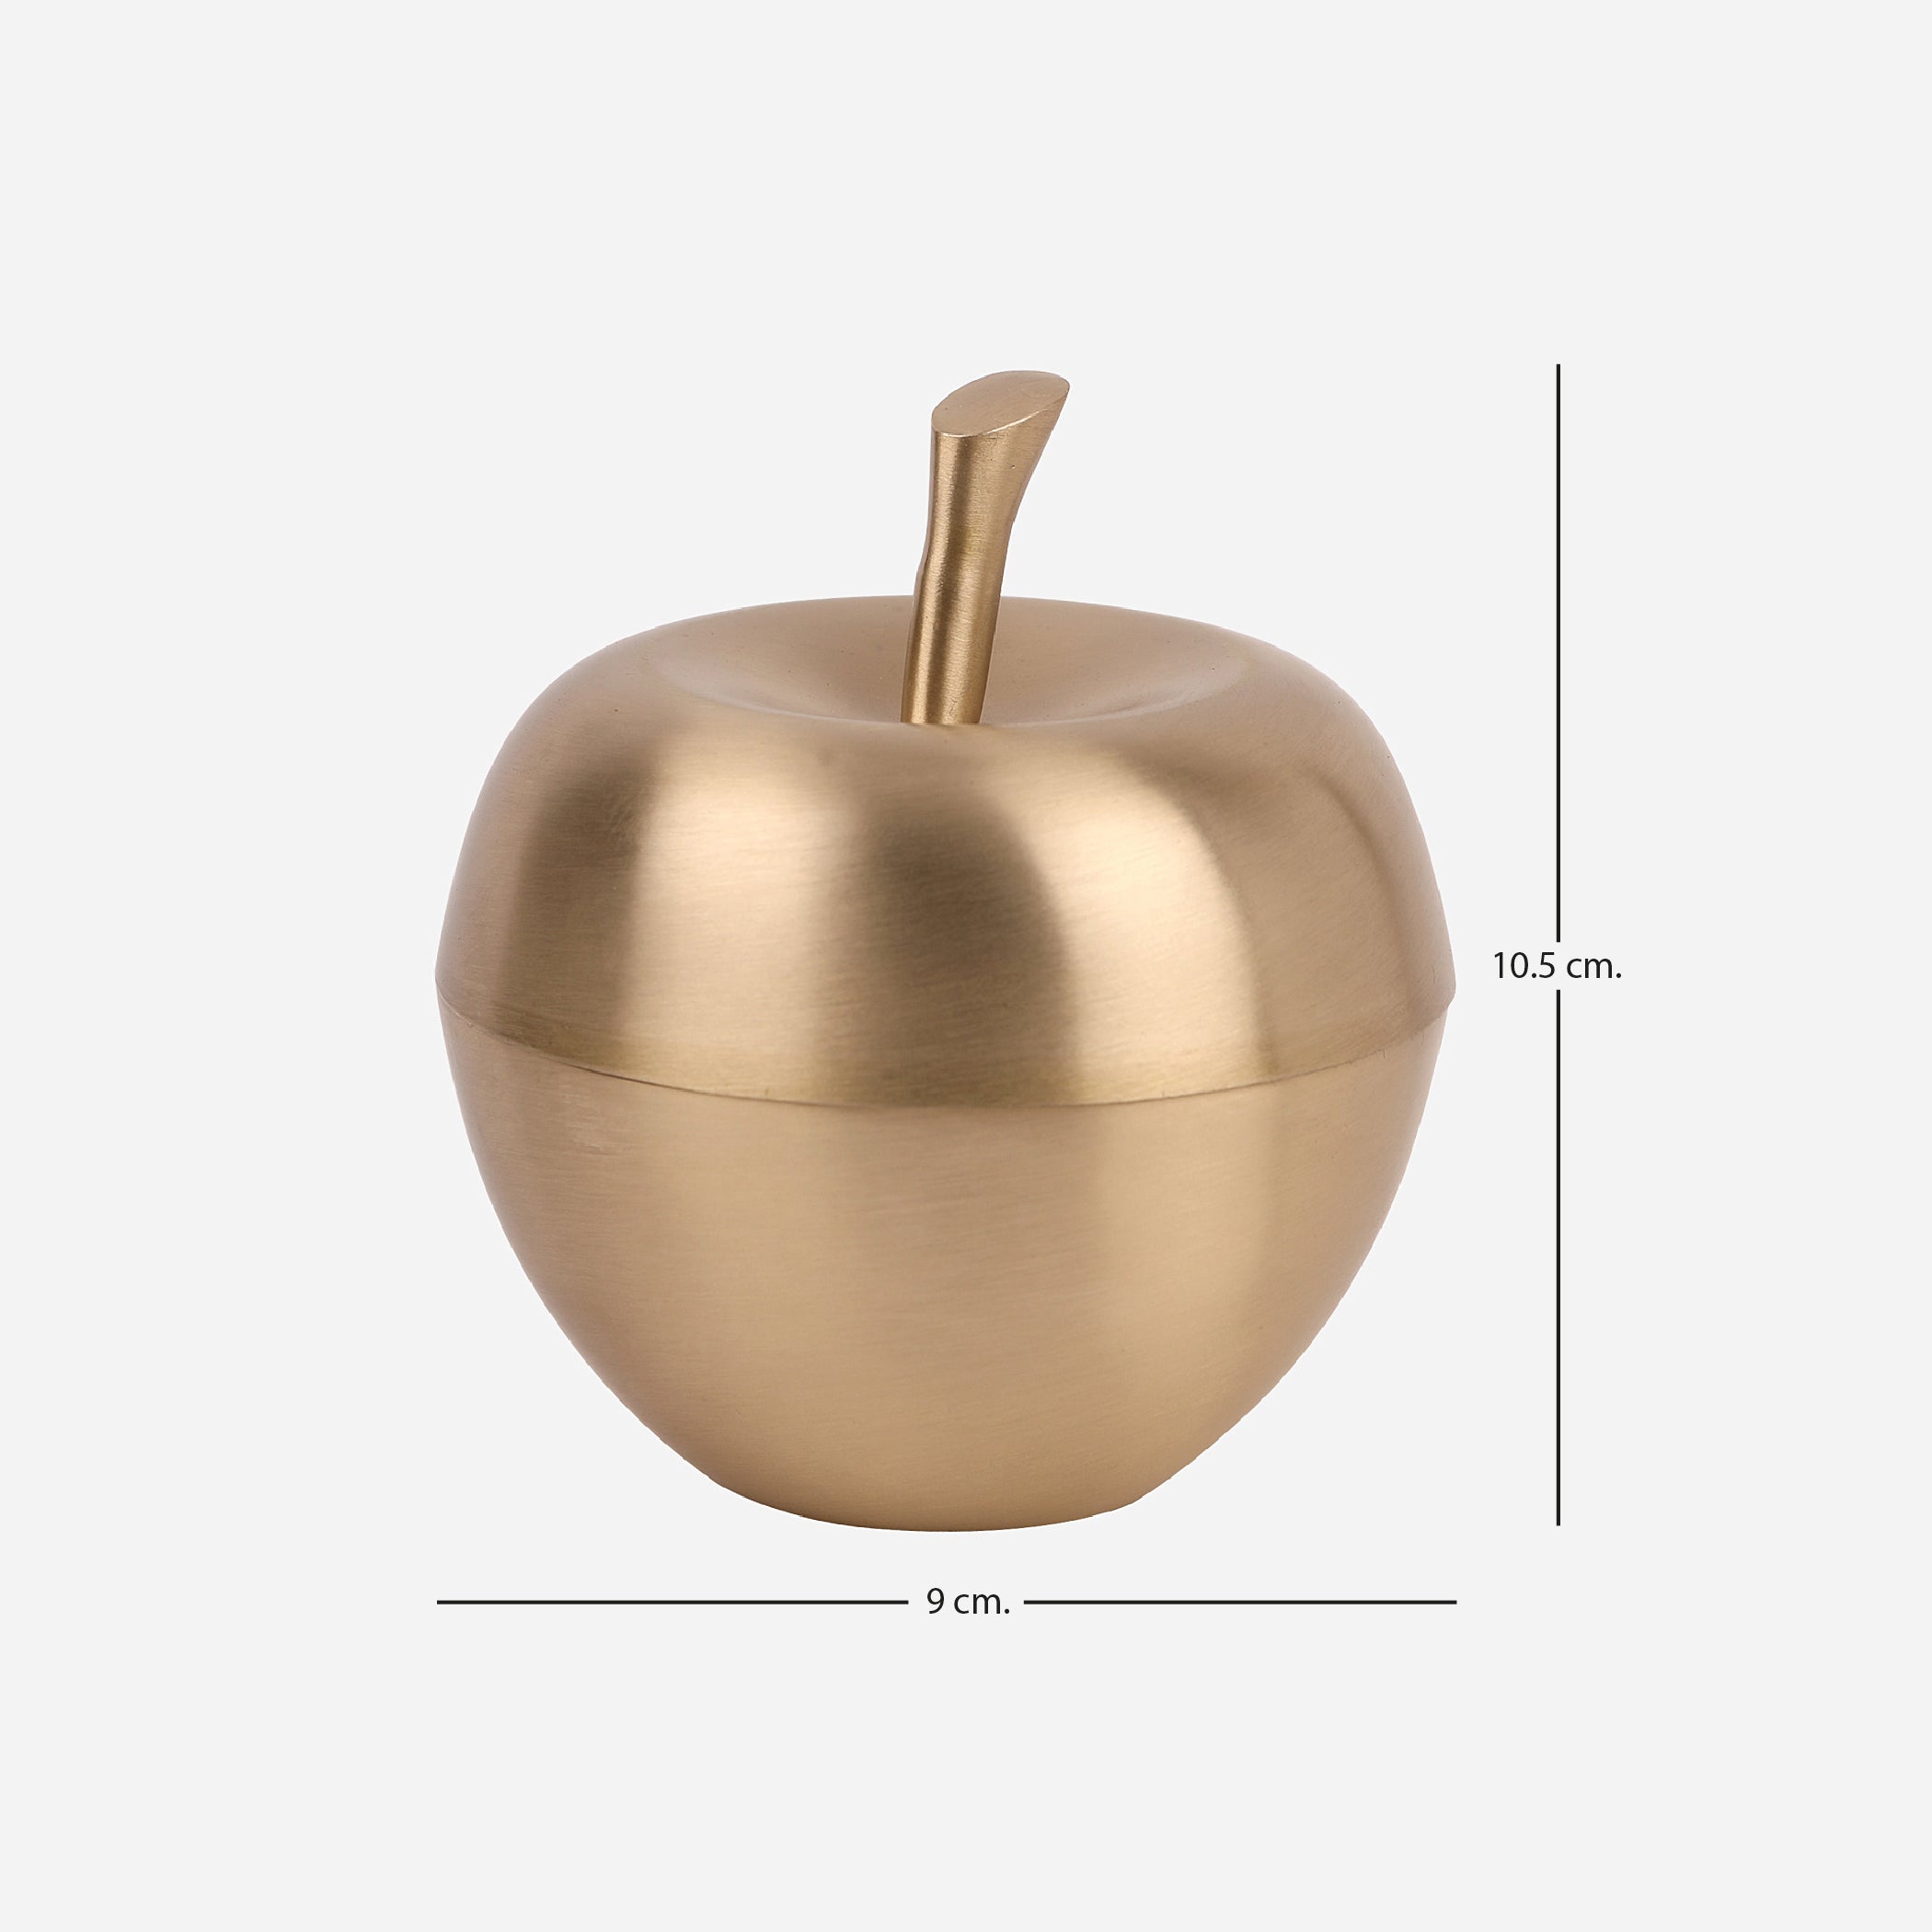 Apple & Pear Candle Set